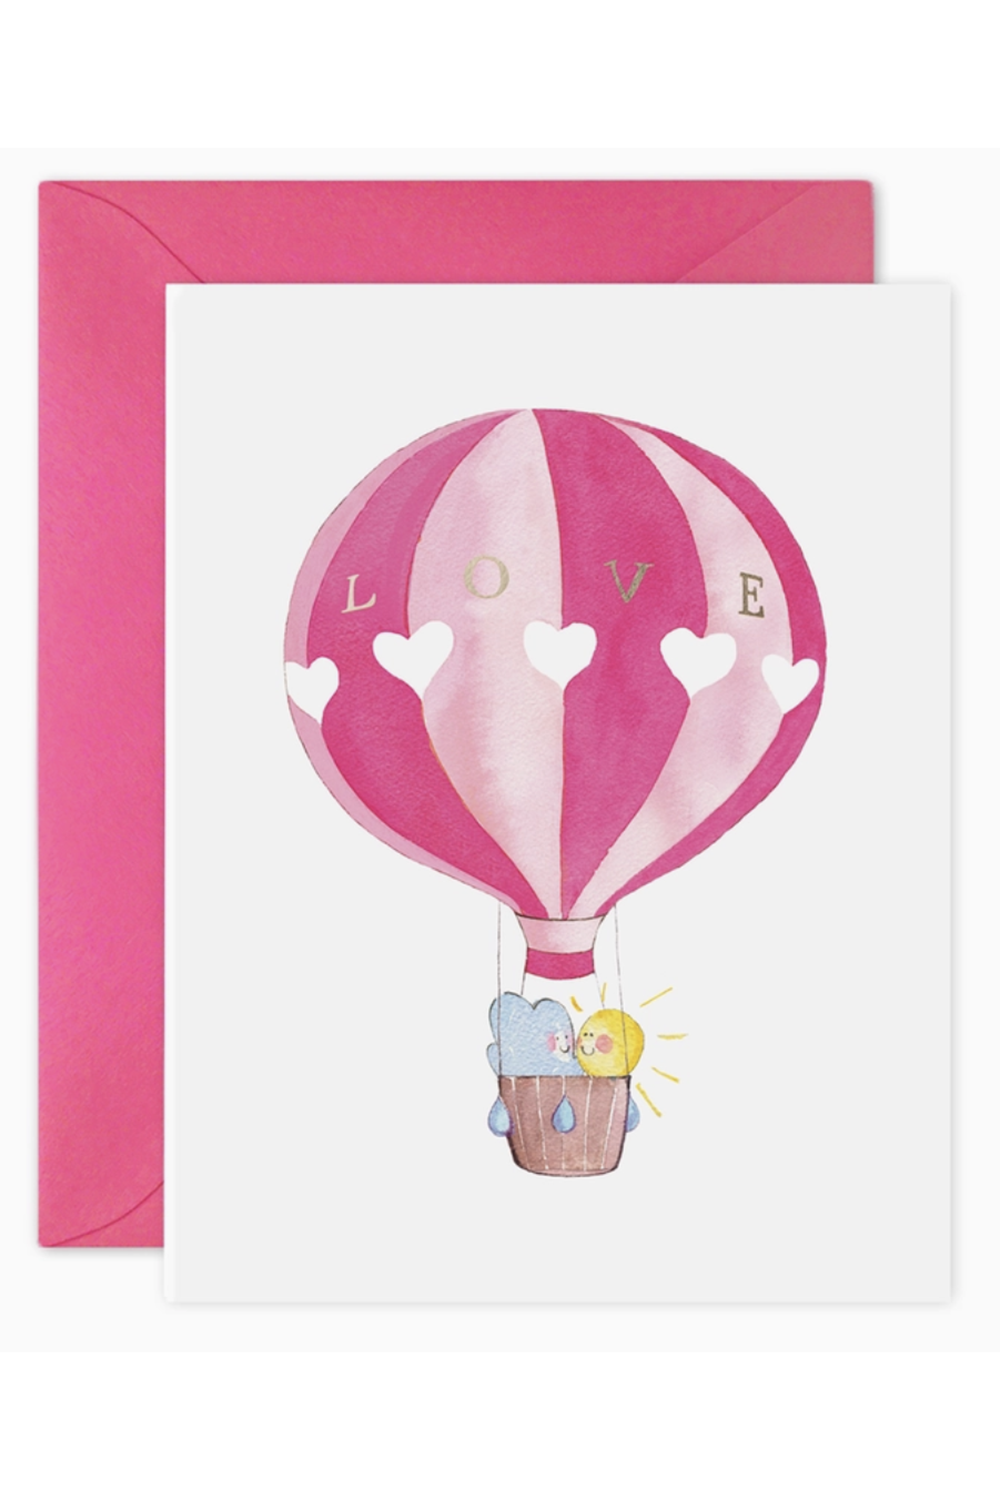 EFran Valentine's Day Greeting Card - Hot Air Balloon